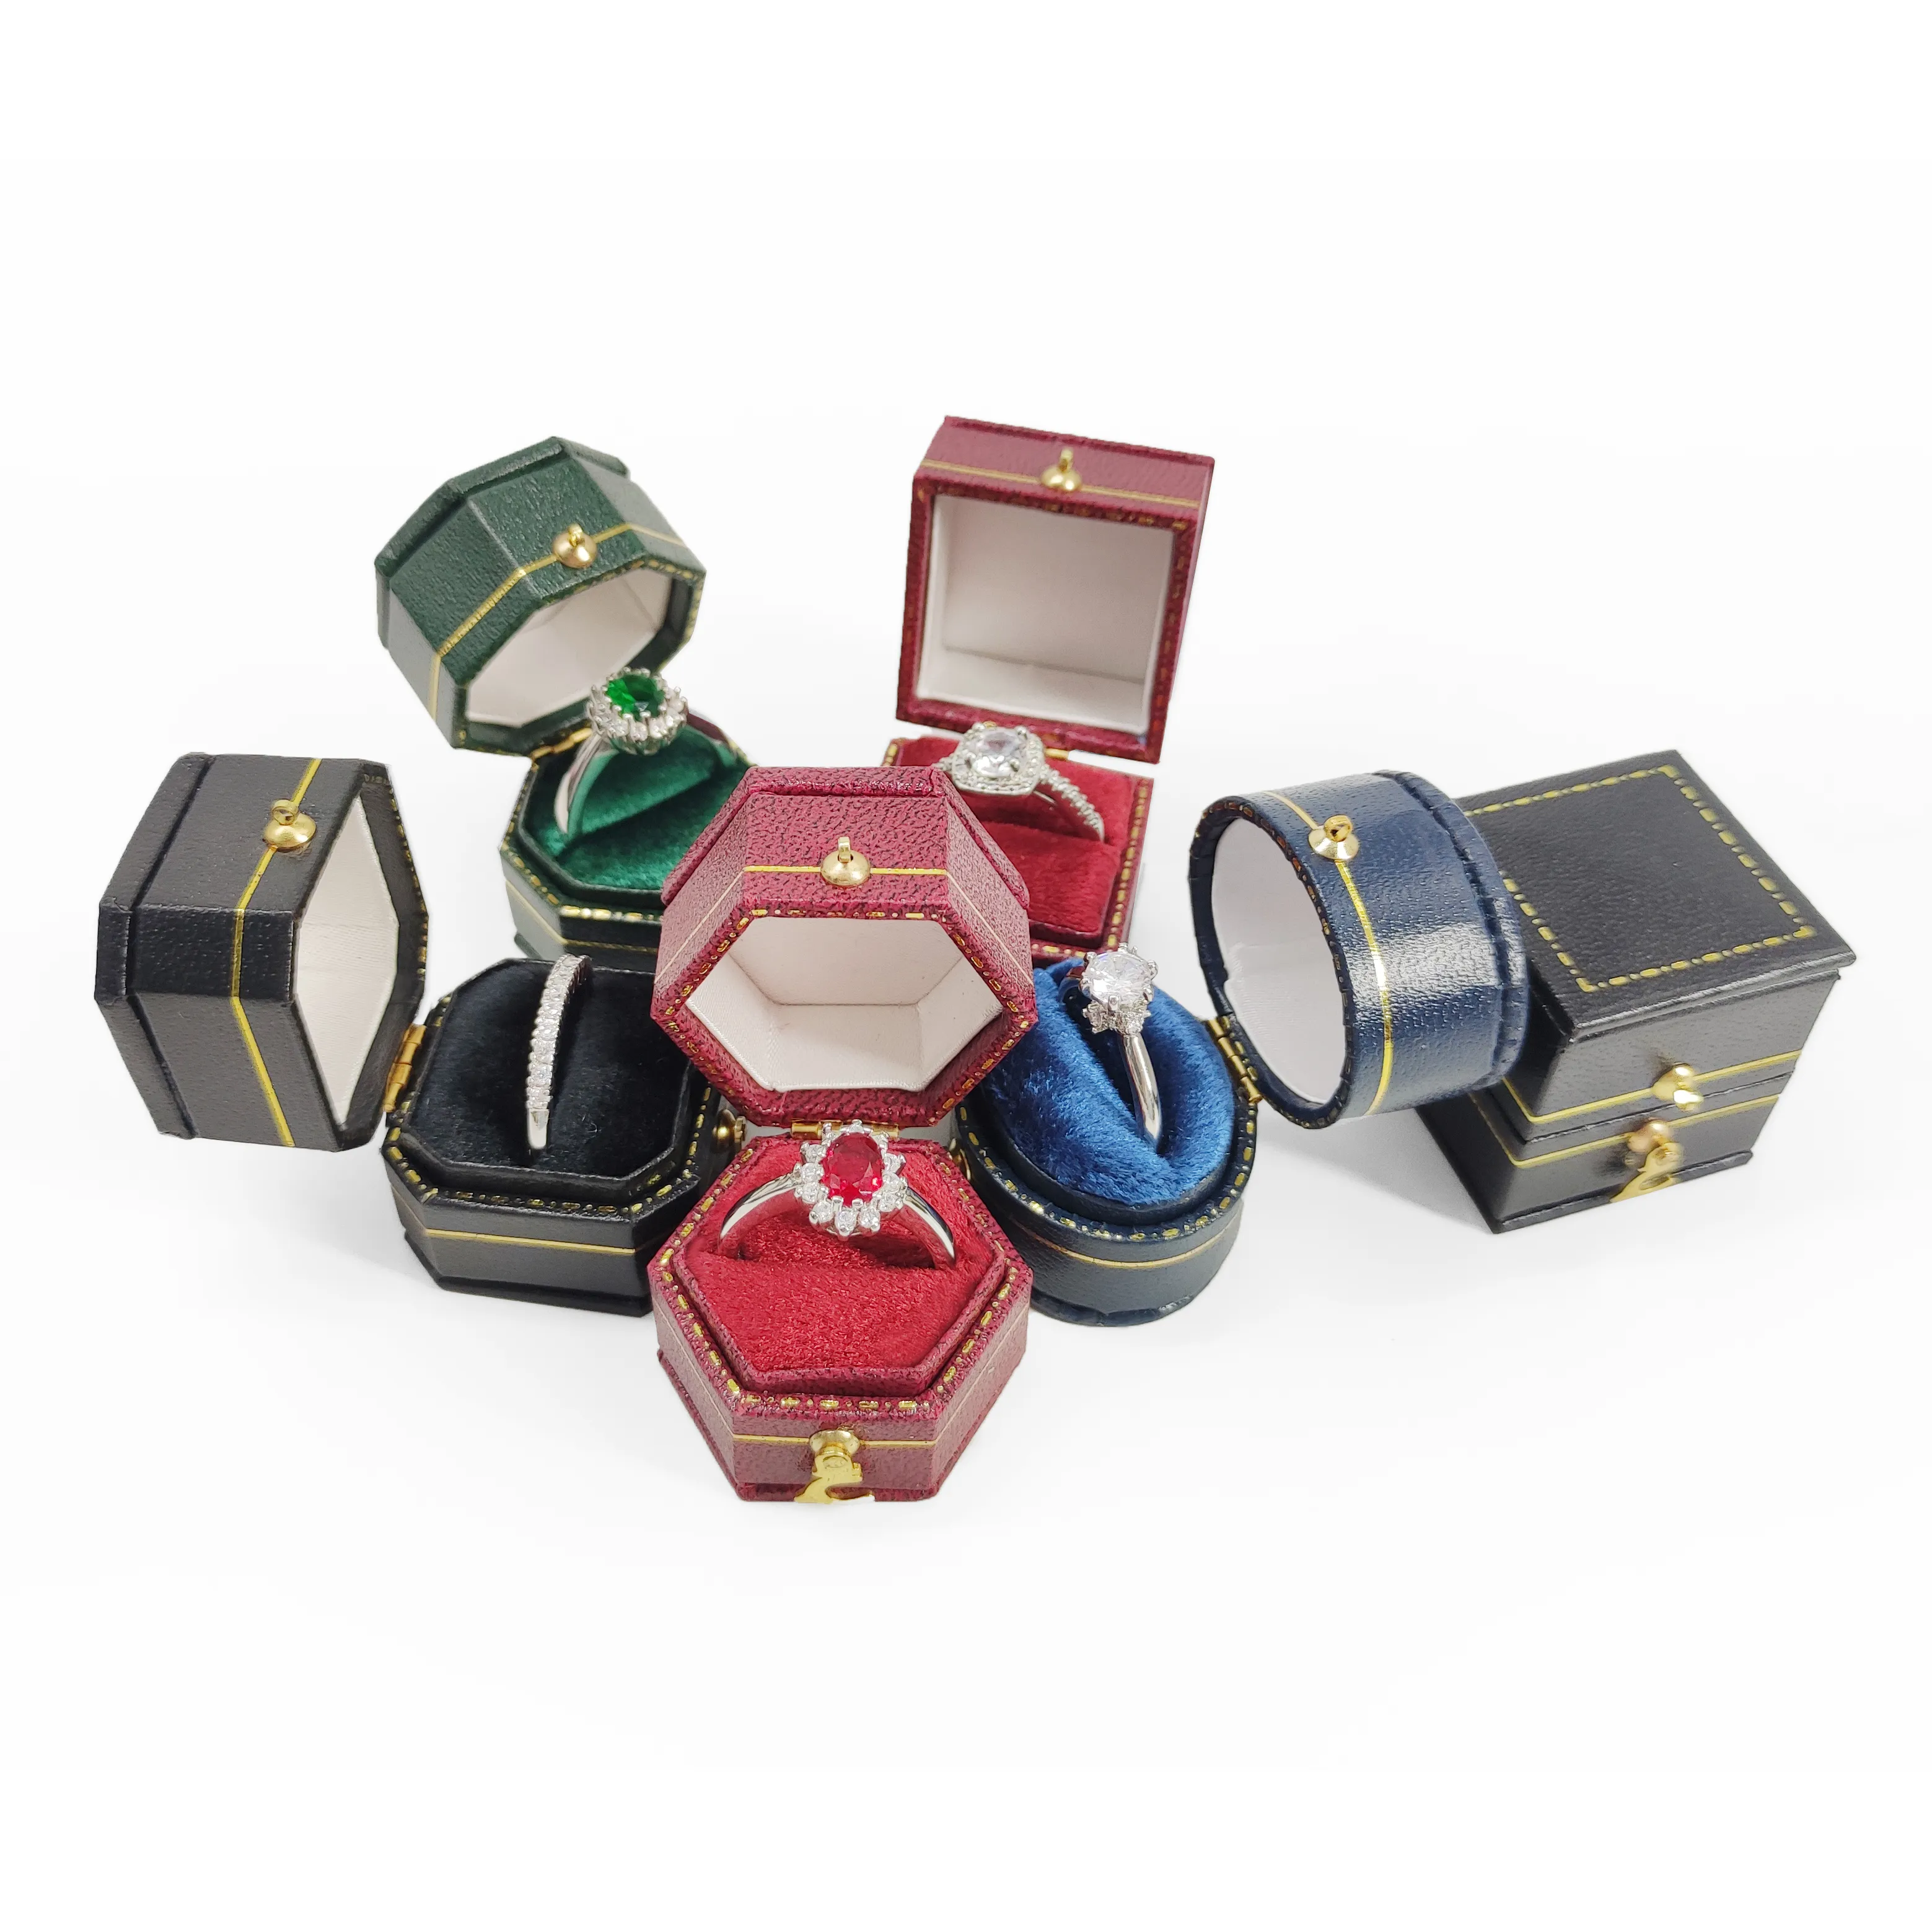 Factory stock blue mini vintage ring pose prop jewelry box vintage jewelry box octagonal ring box